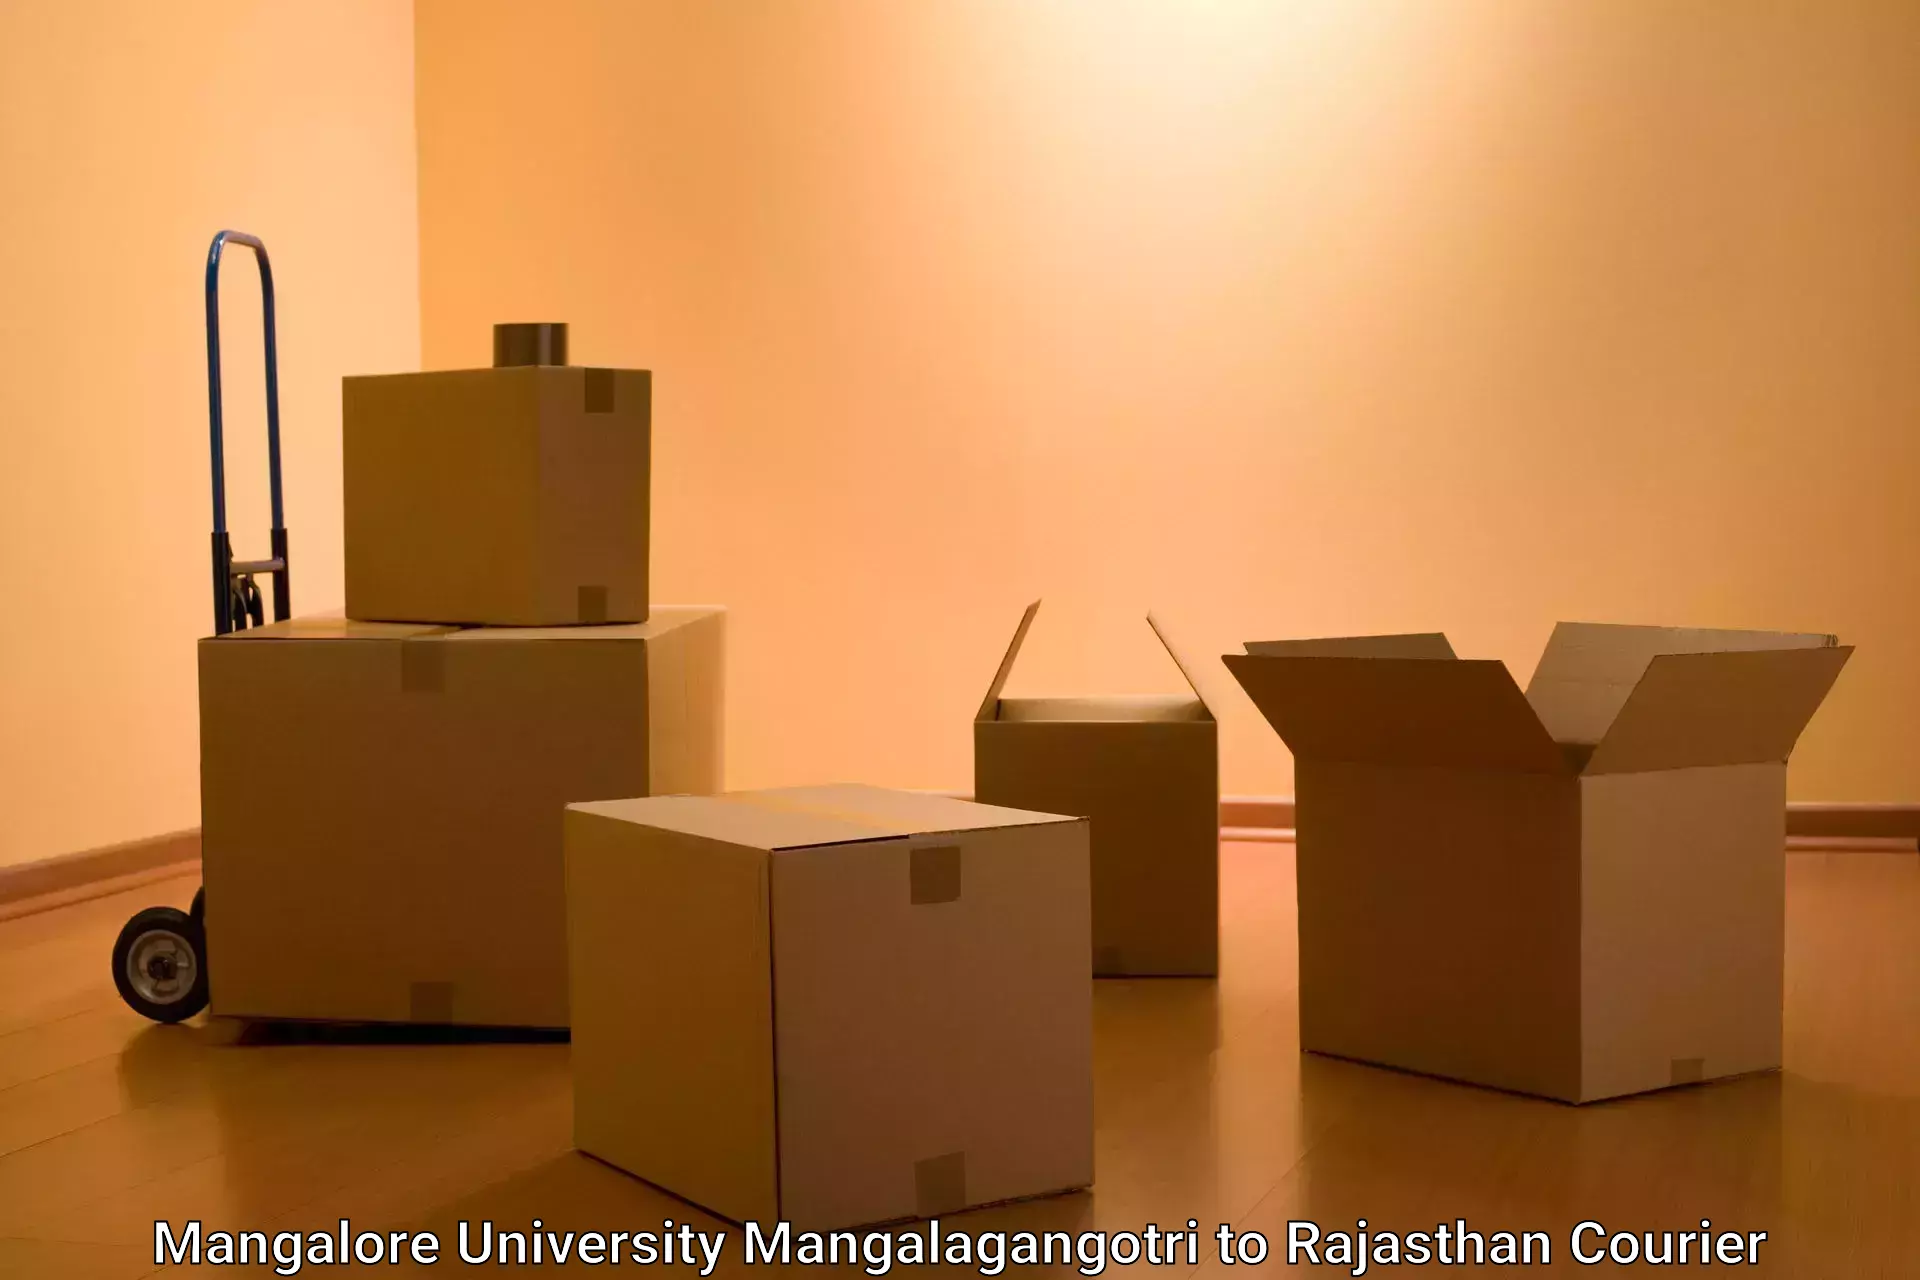 Express logistics providers Mangalore University Mangalagangotri to Rajasthan